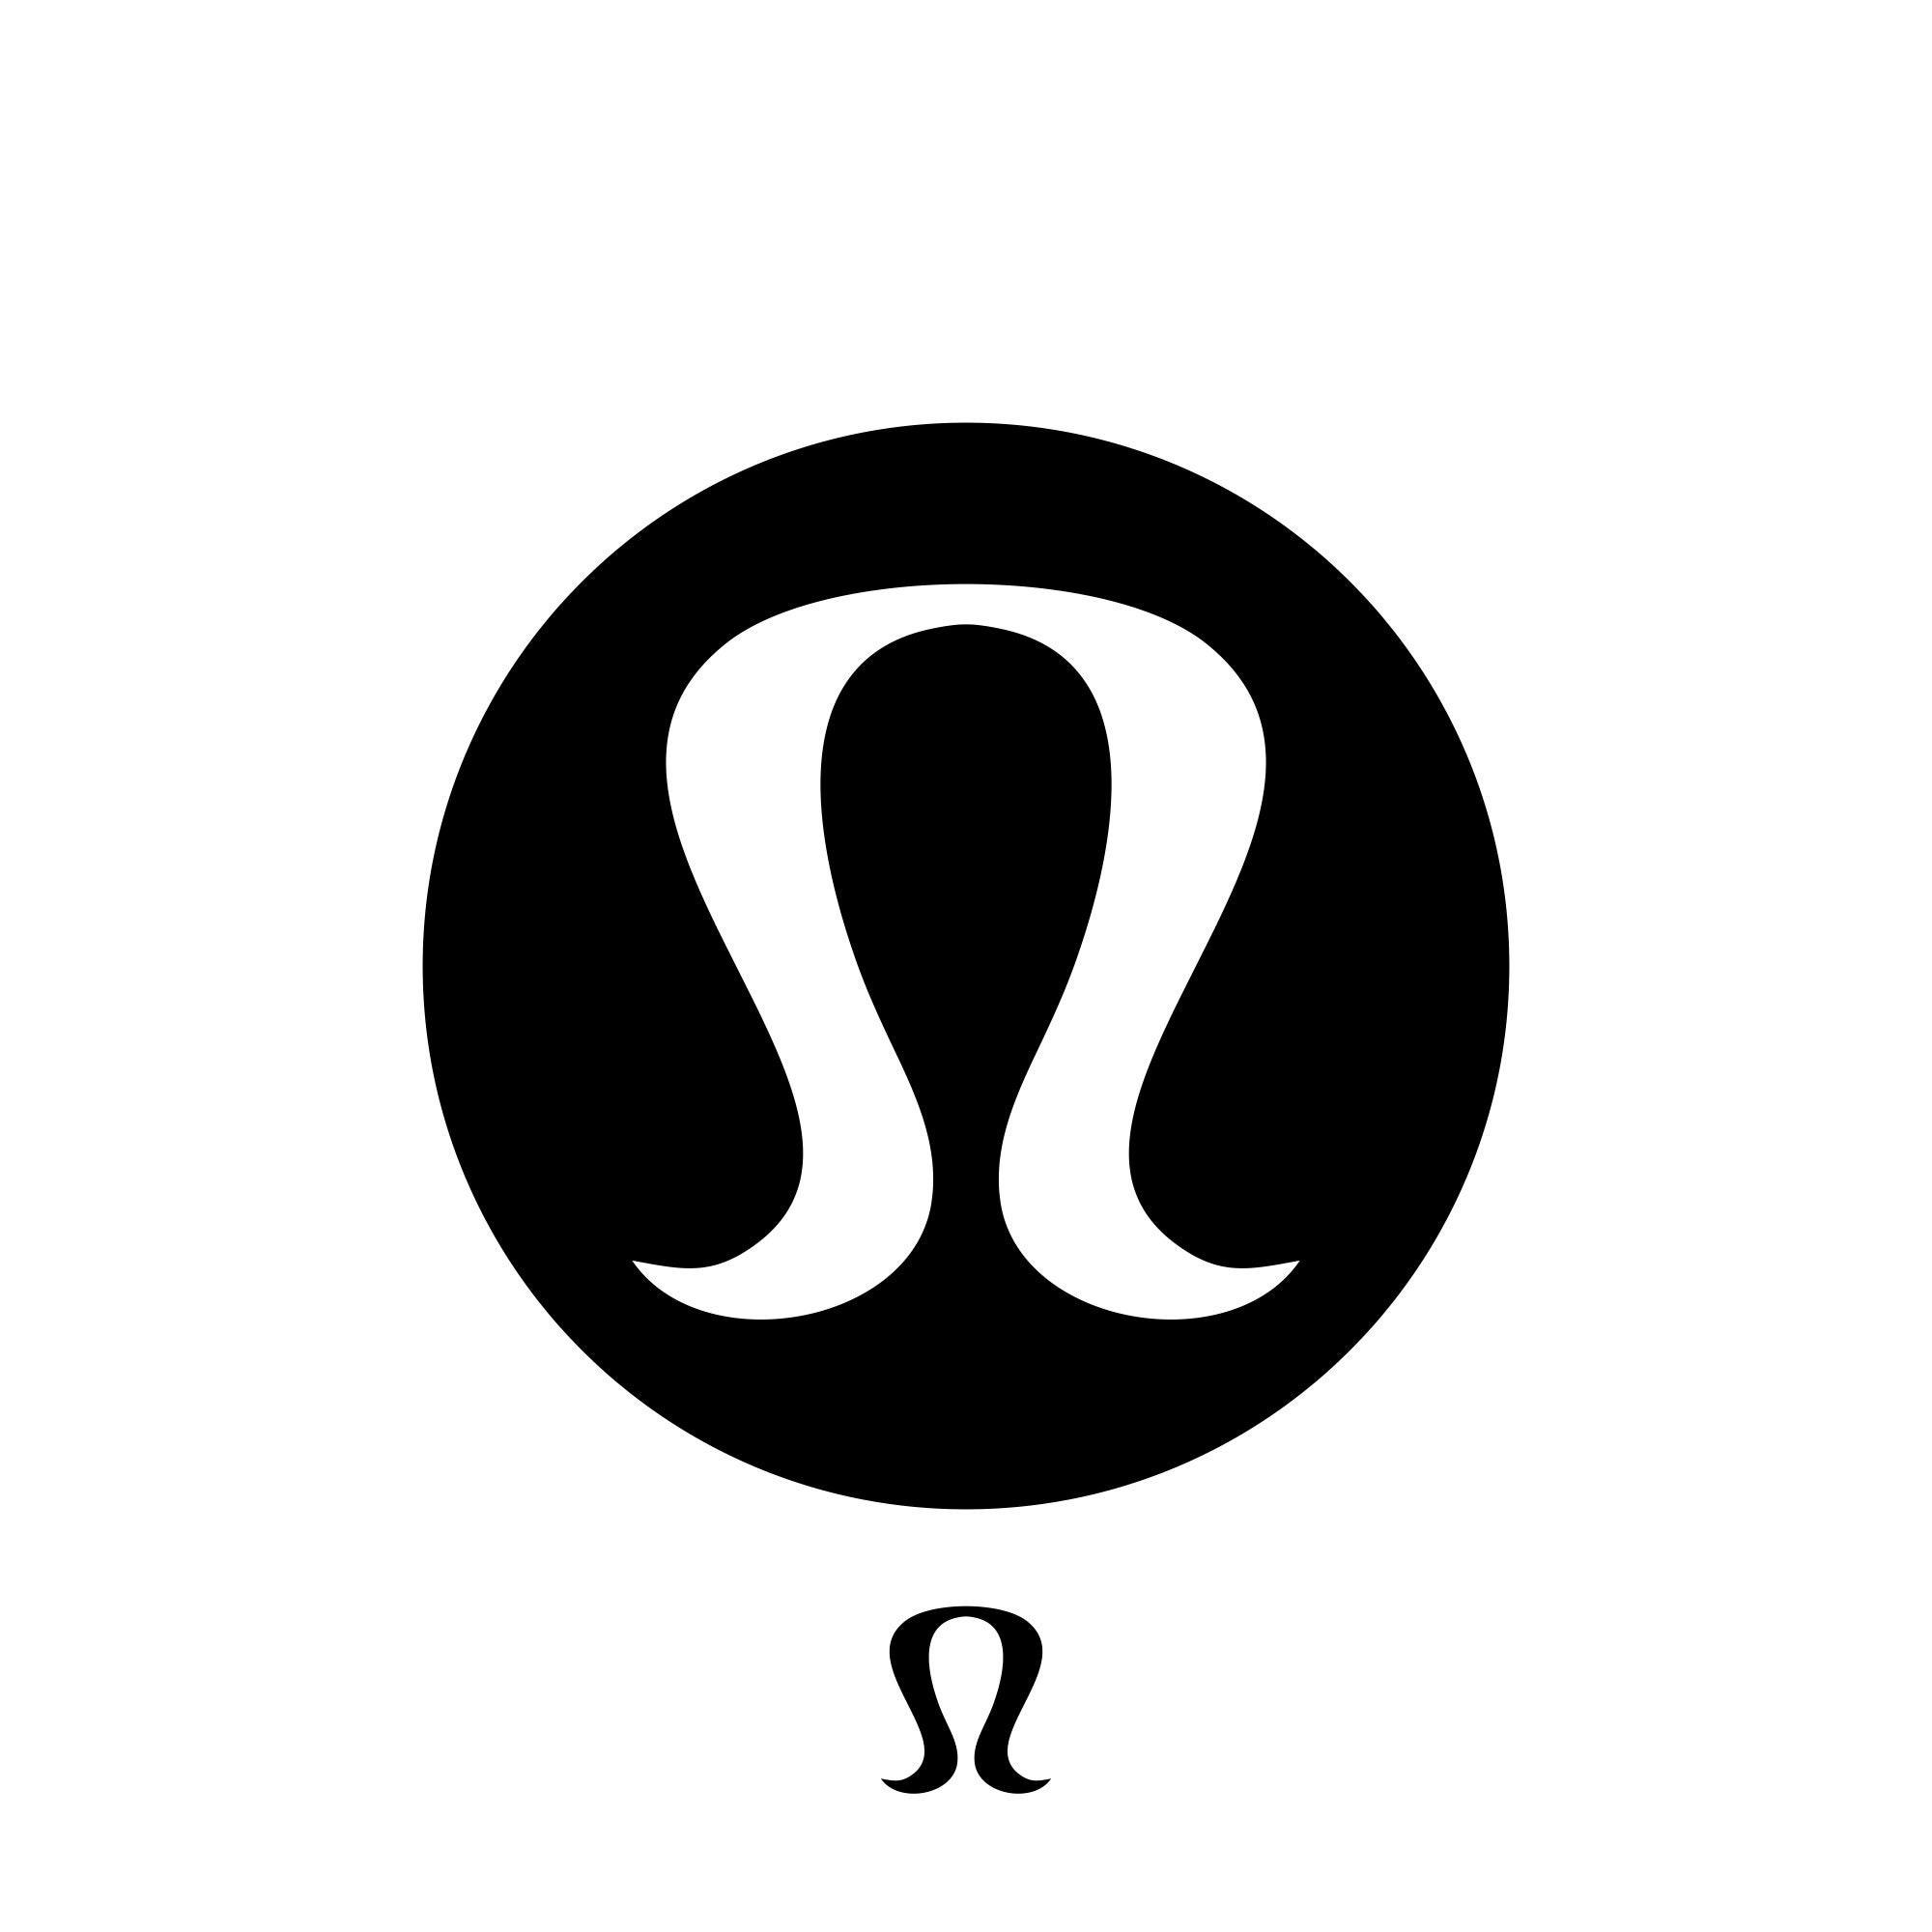 Lululemon Athletica Logo Vancouver Yoga Company, Lemon, Canada, Monochrome,  Sports Png PNGWing